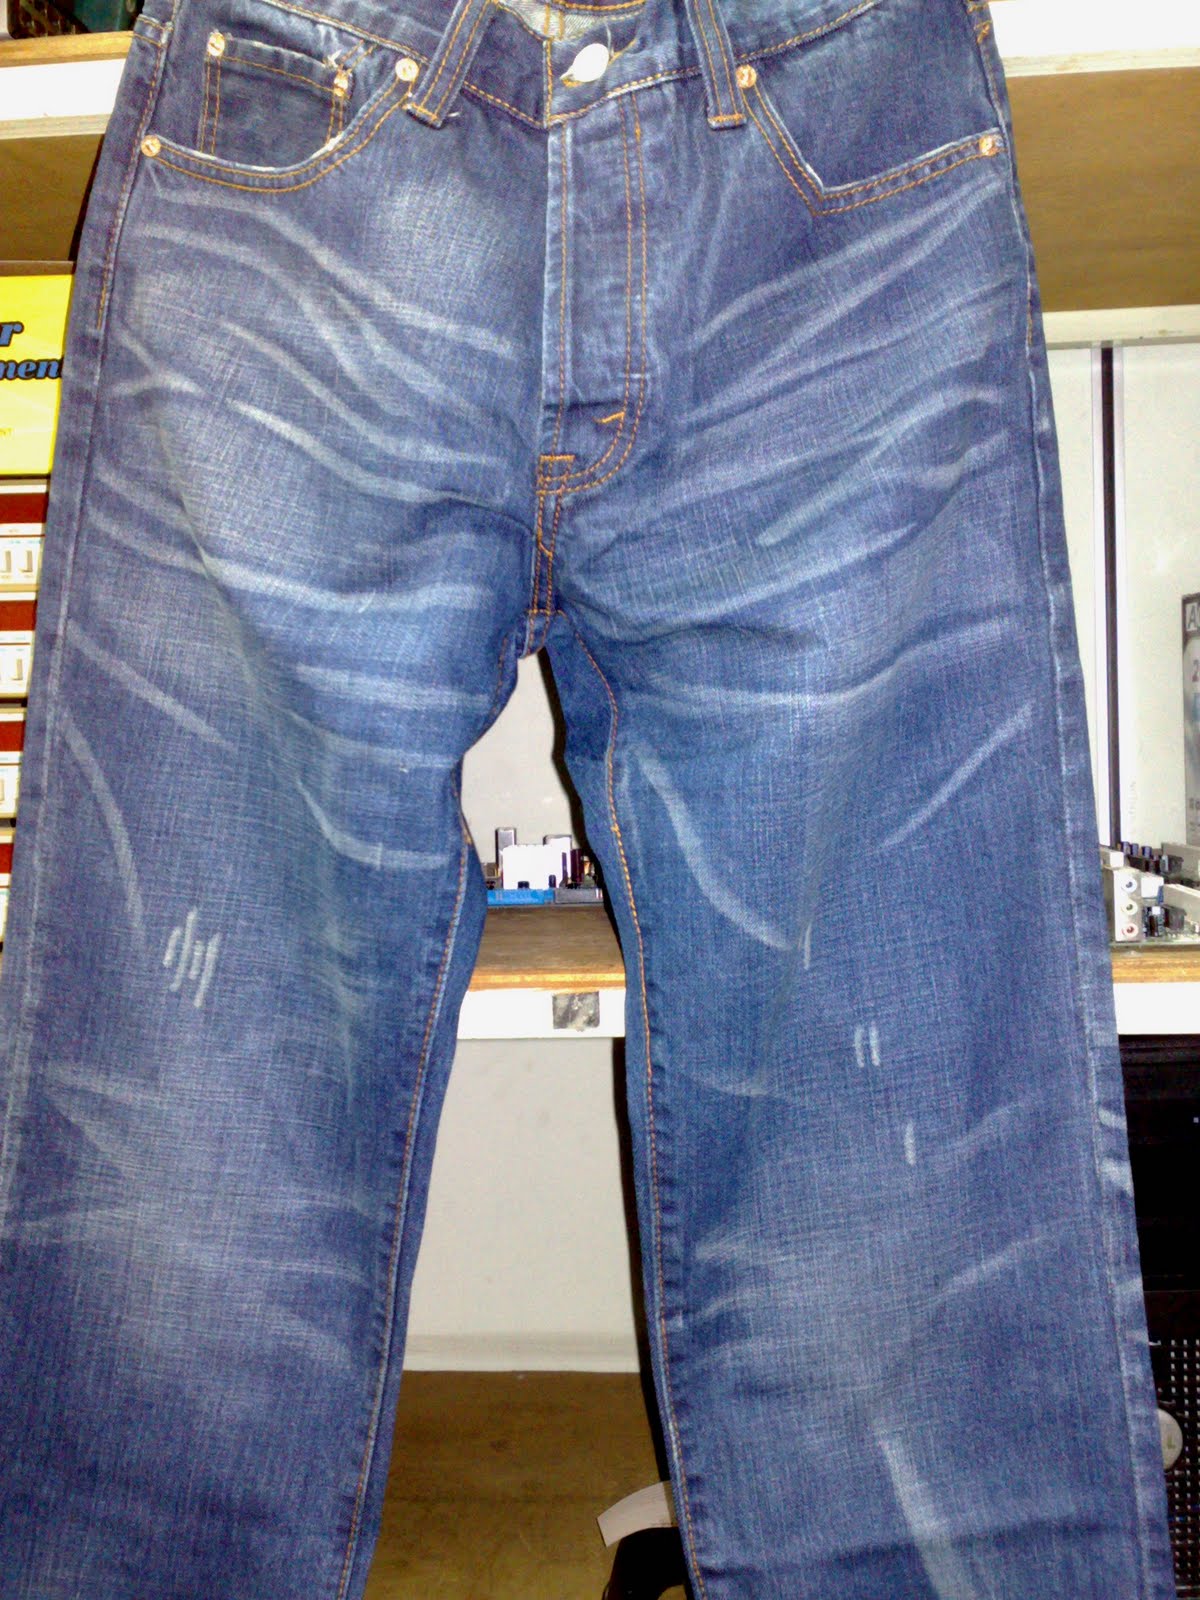 Market1Malaysia: Levi's 501 Button Fly Preshrunk Jeans